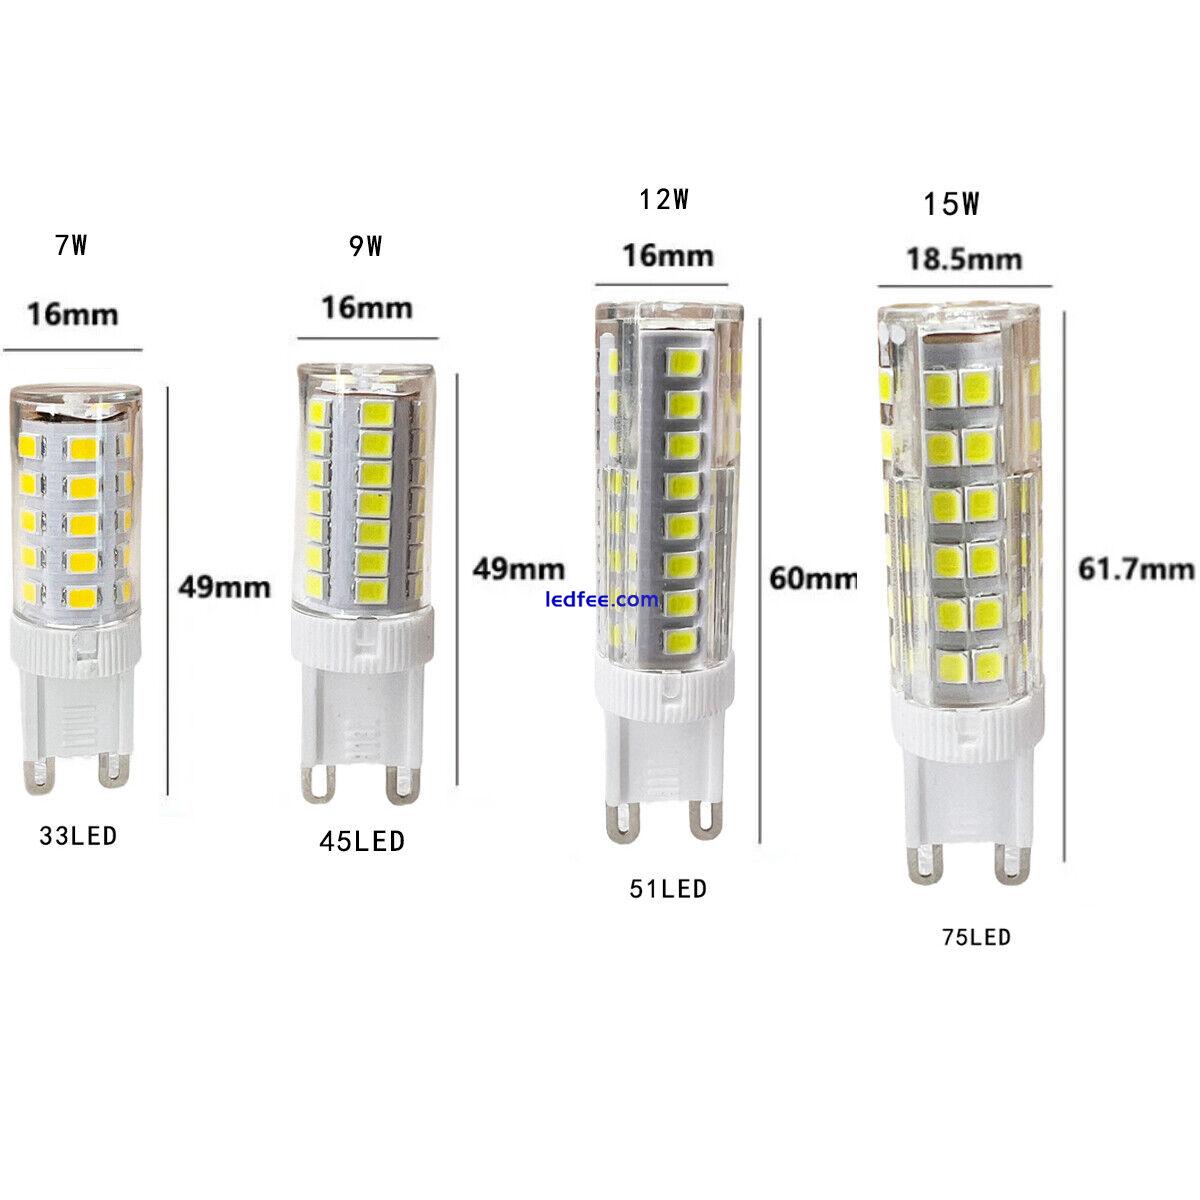 Mini G9 LED Light Bulbs 7W - 24W 220V Ceramic 2835 SMD Replace 100W Halogen Lamp 0 